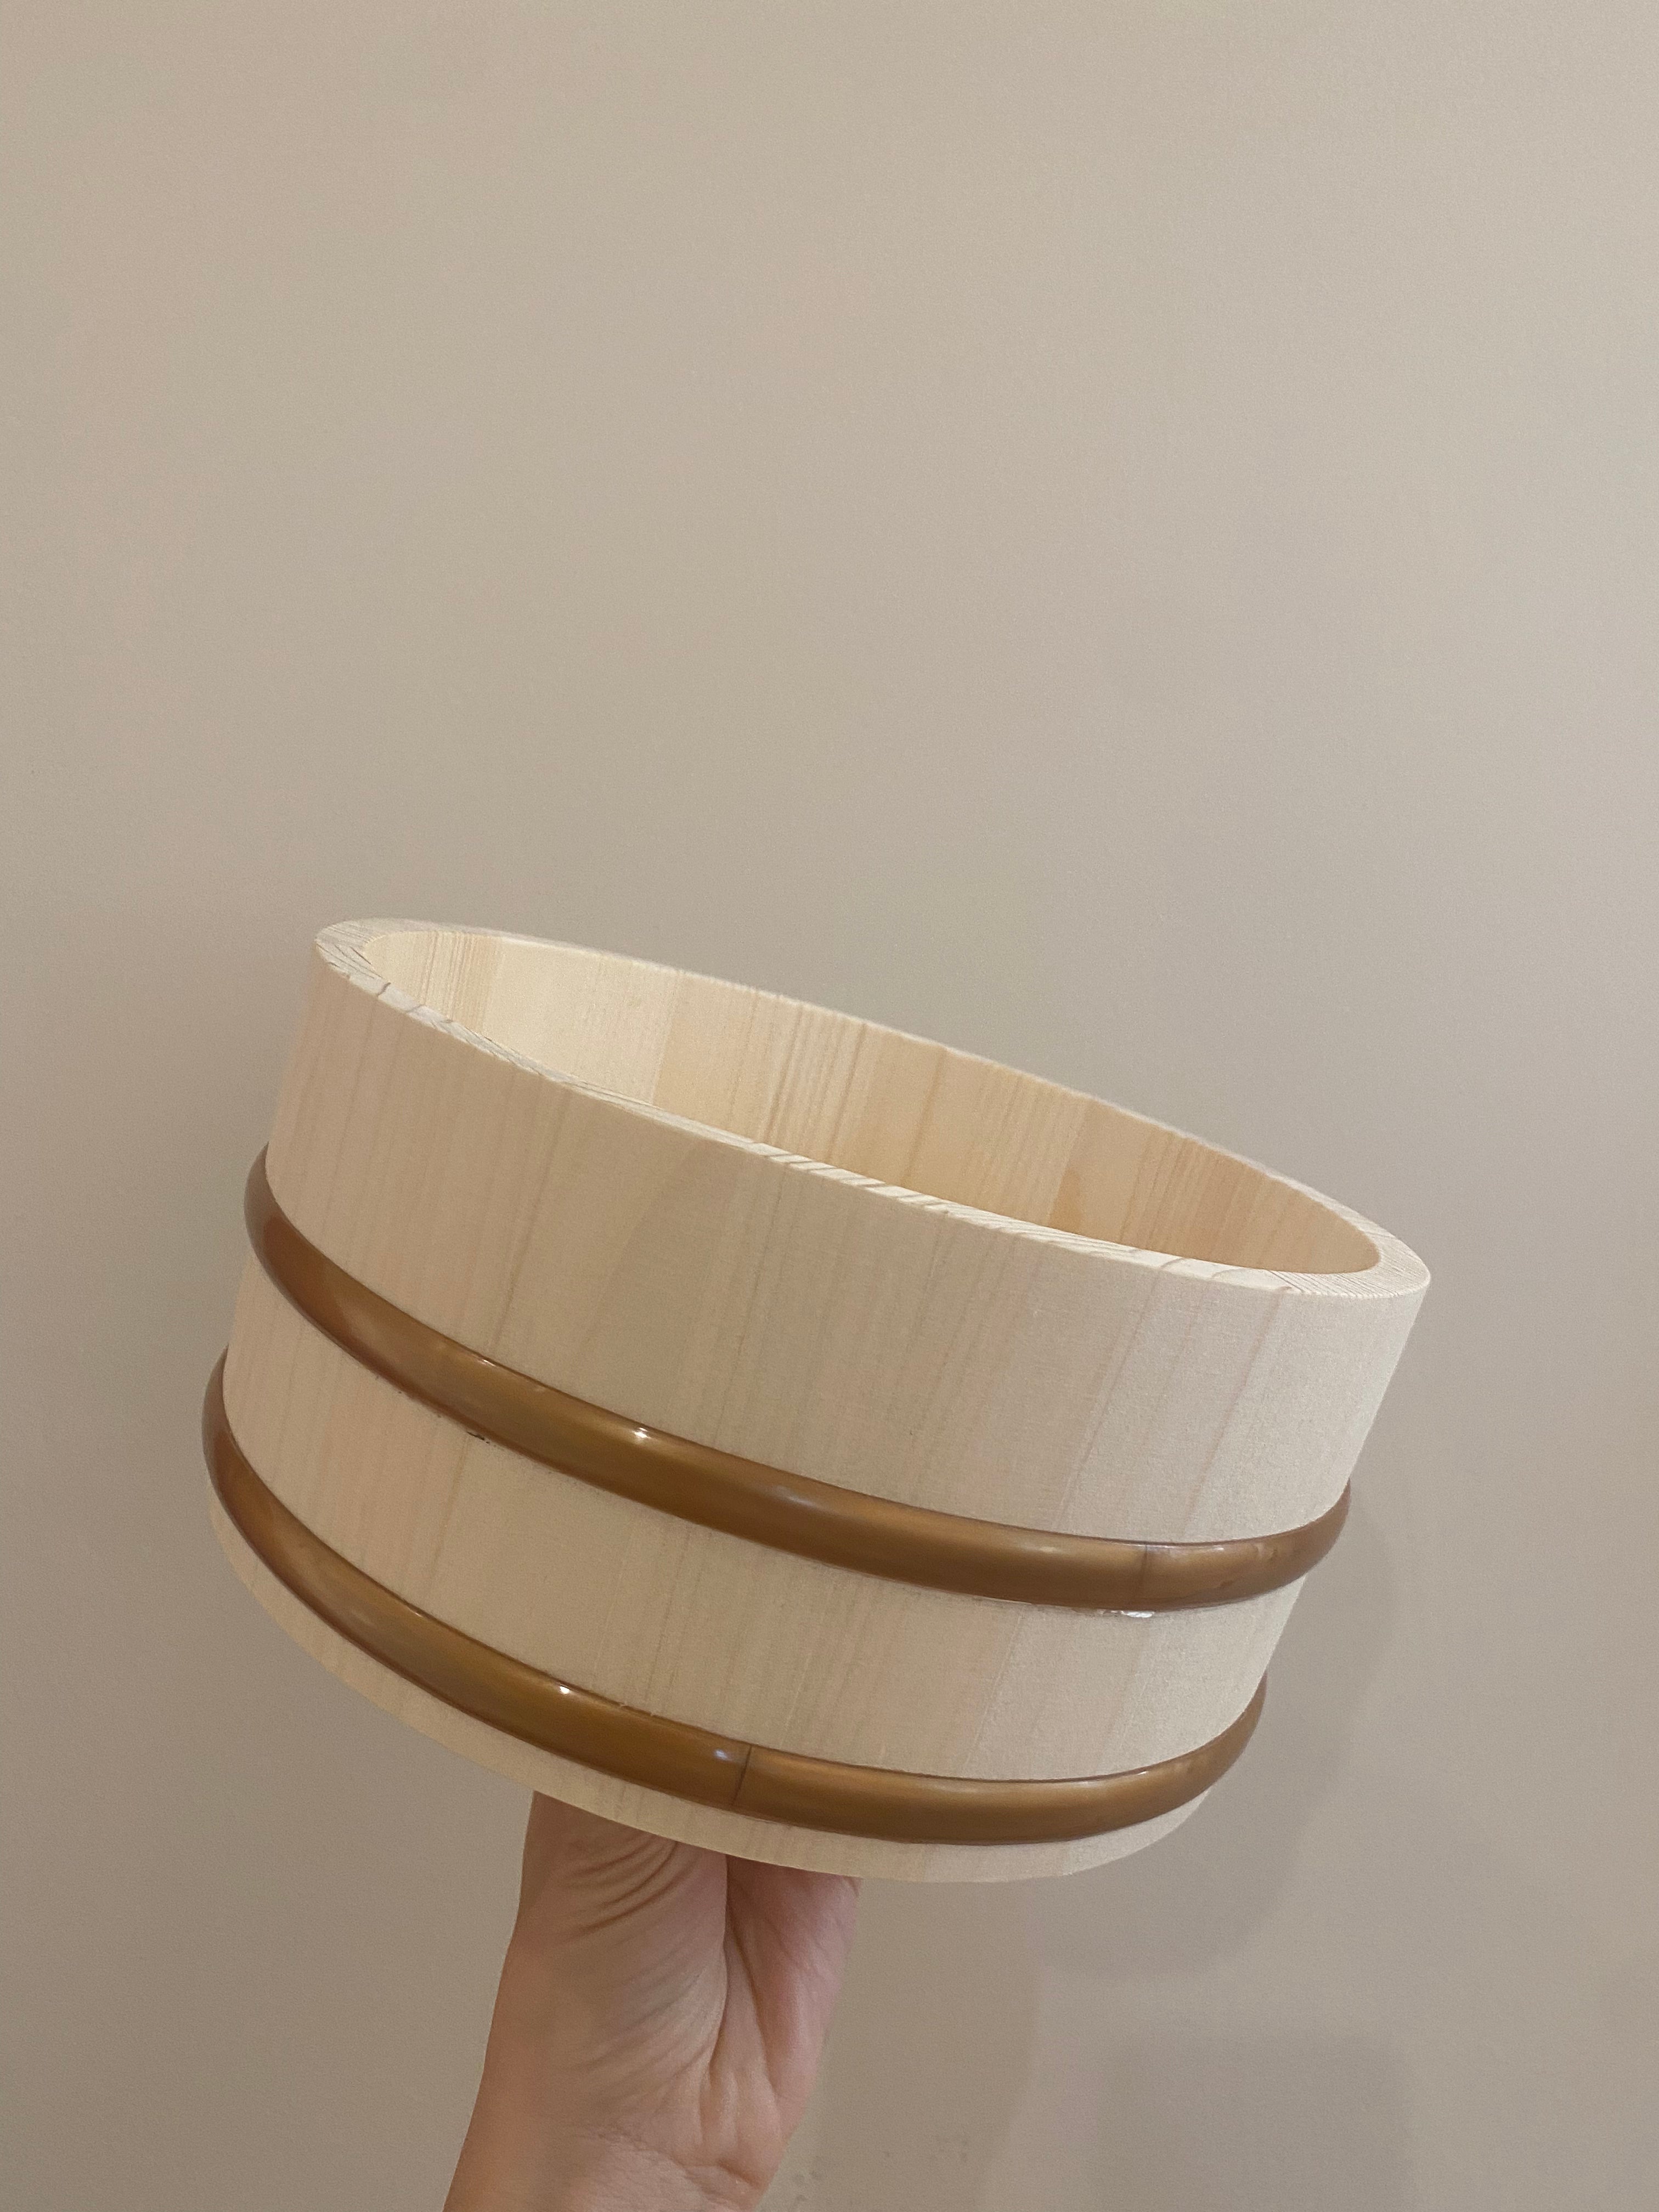 Washbasin with plastic band